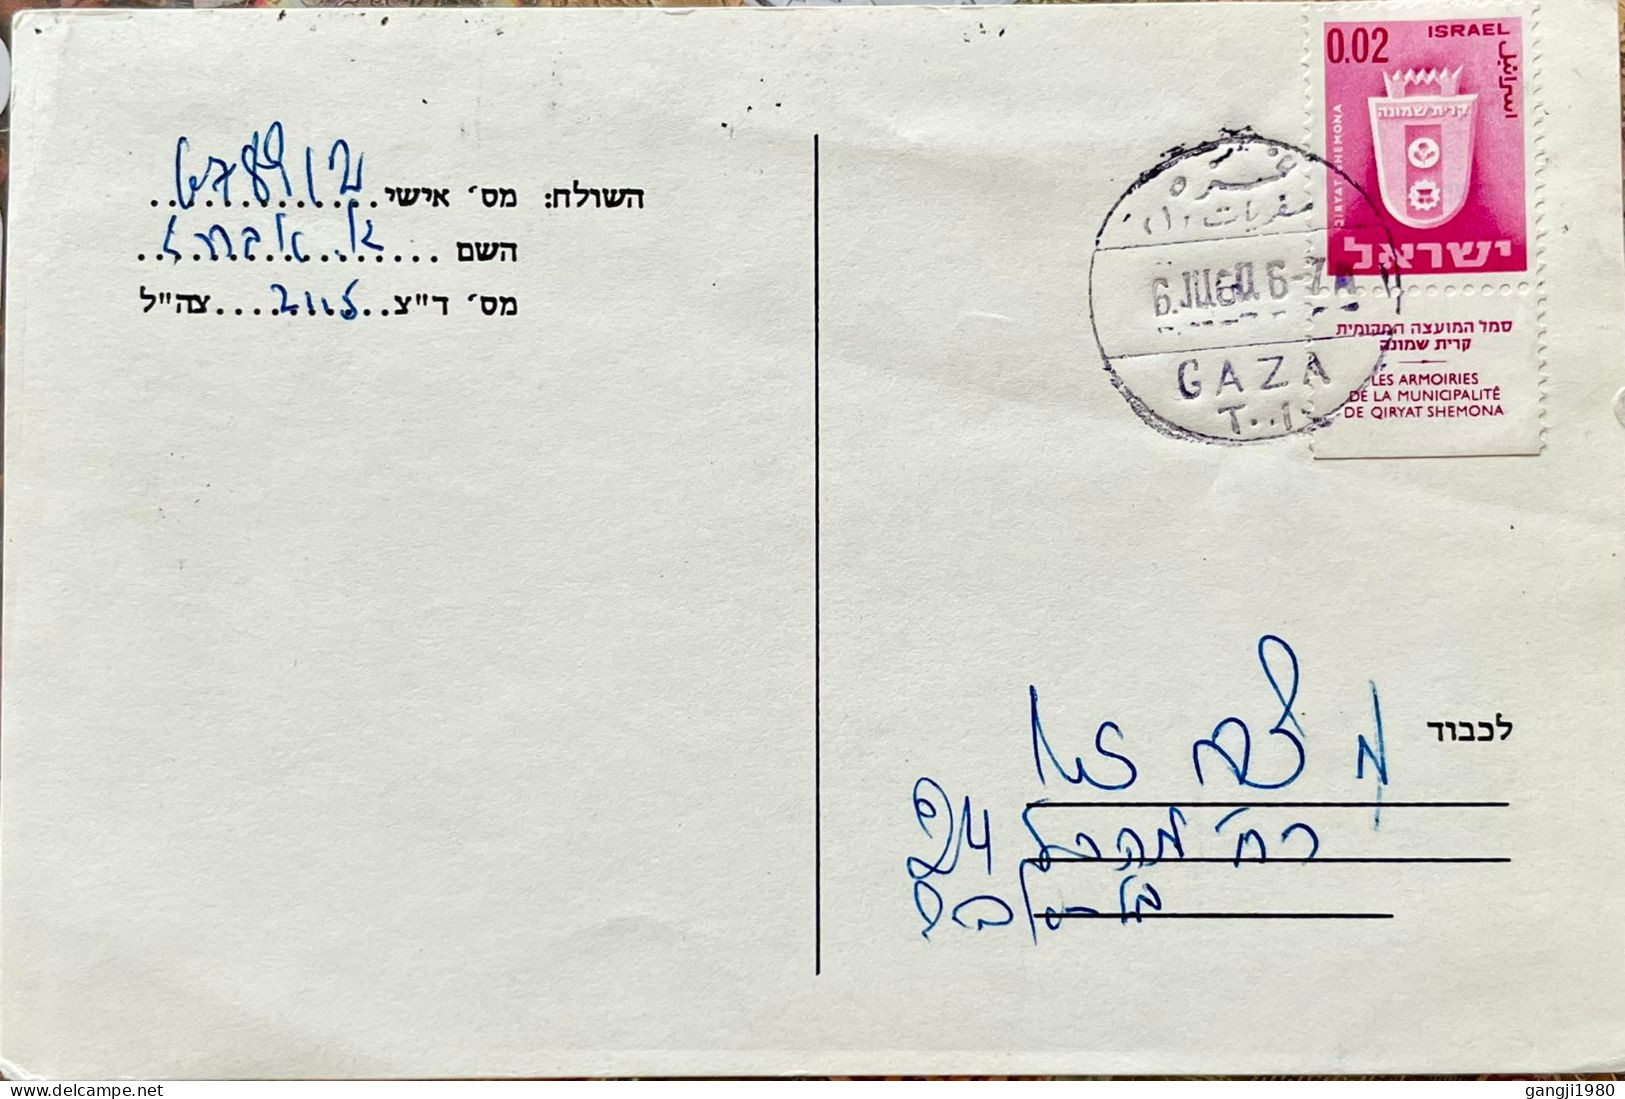 ISRAEL 1960, STUDY OR SLEEPING, HUMOR USED POSTCARD, COAT OF ARM STAMP WITH TAB, GAZA CITY CANCEL 2 LANGUAGE, - Briefe U. Dokumente